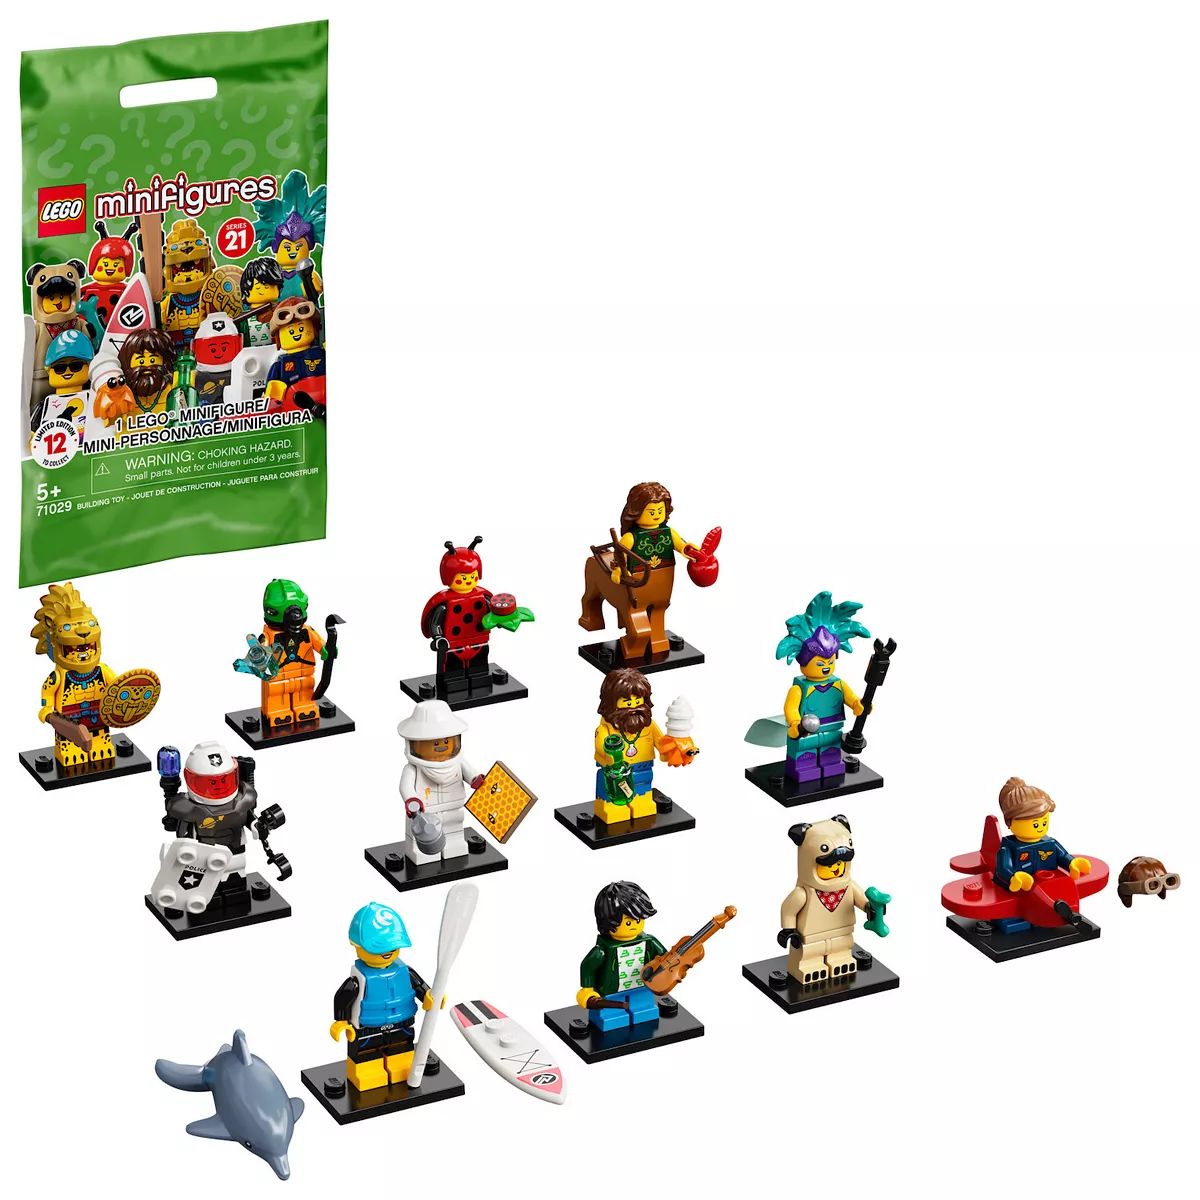 LEGO Minifigures Series 21 Limited Edition LEGO Set 71029 | Kohl's